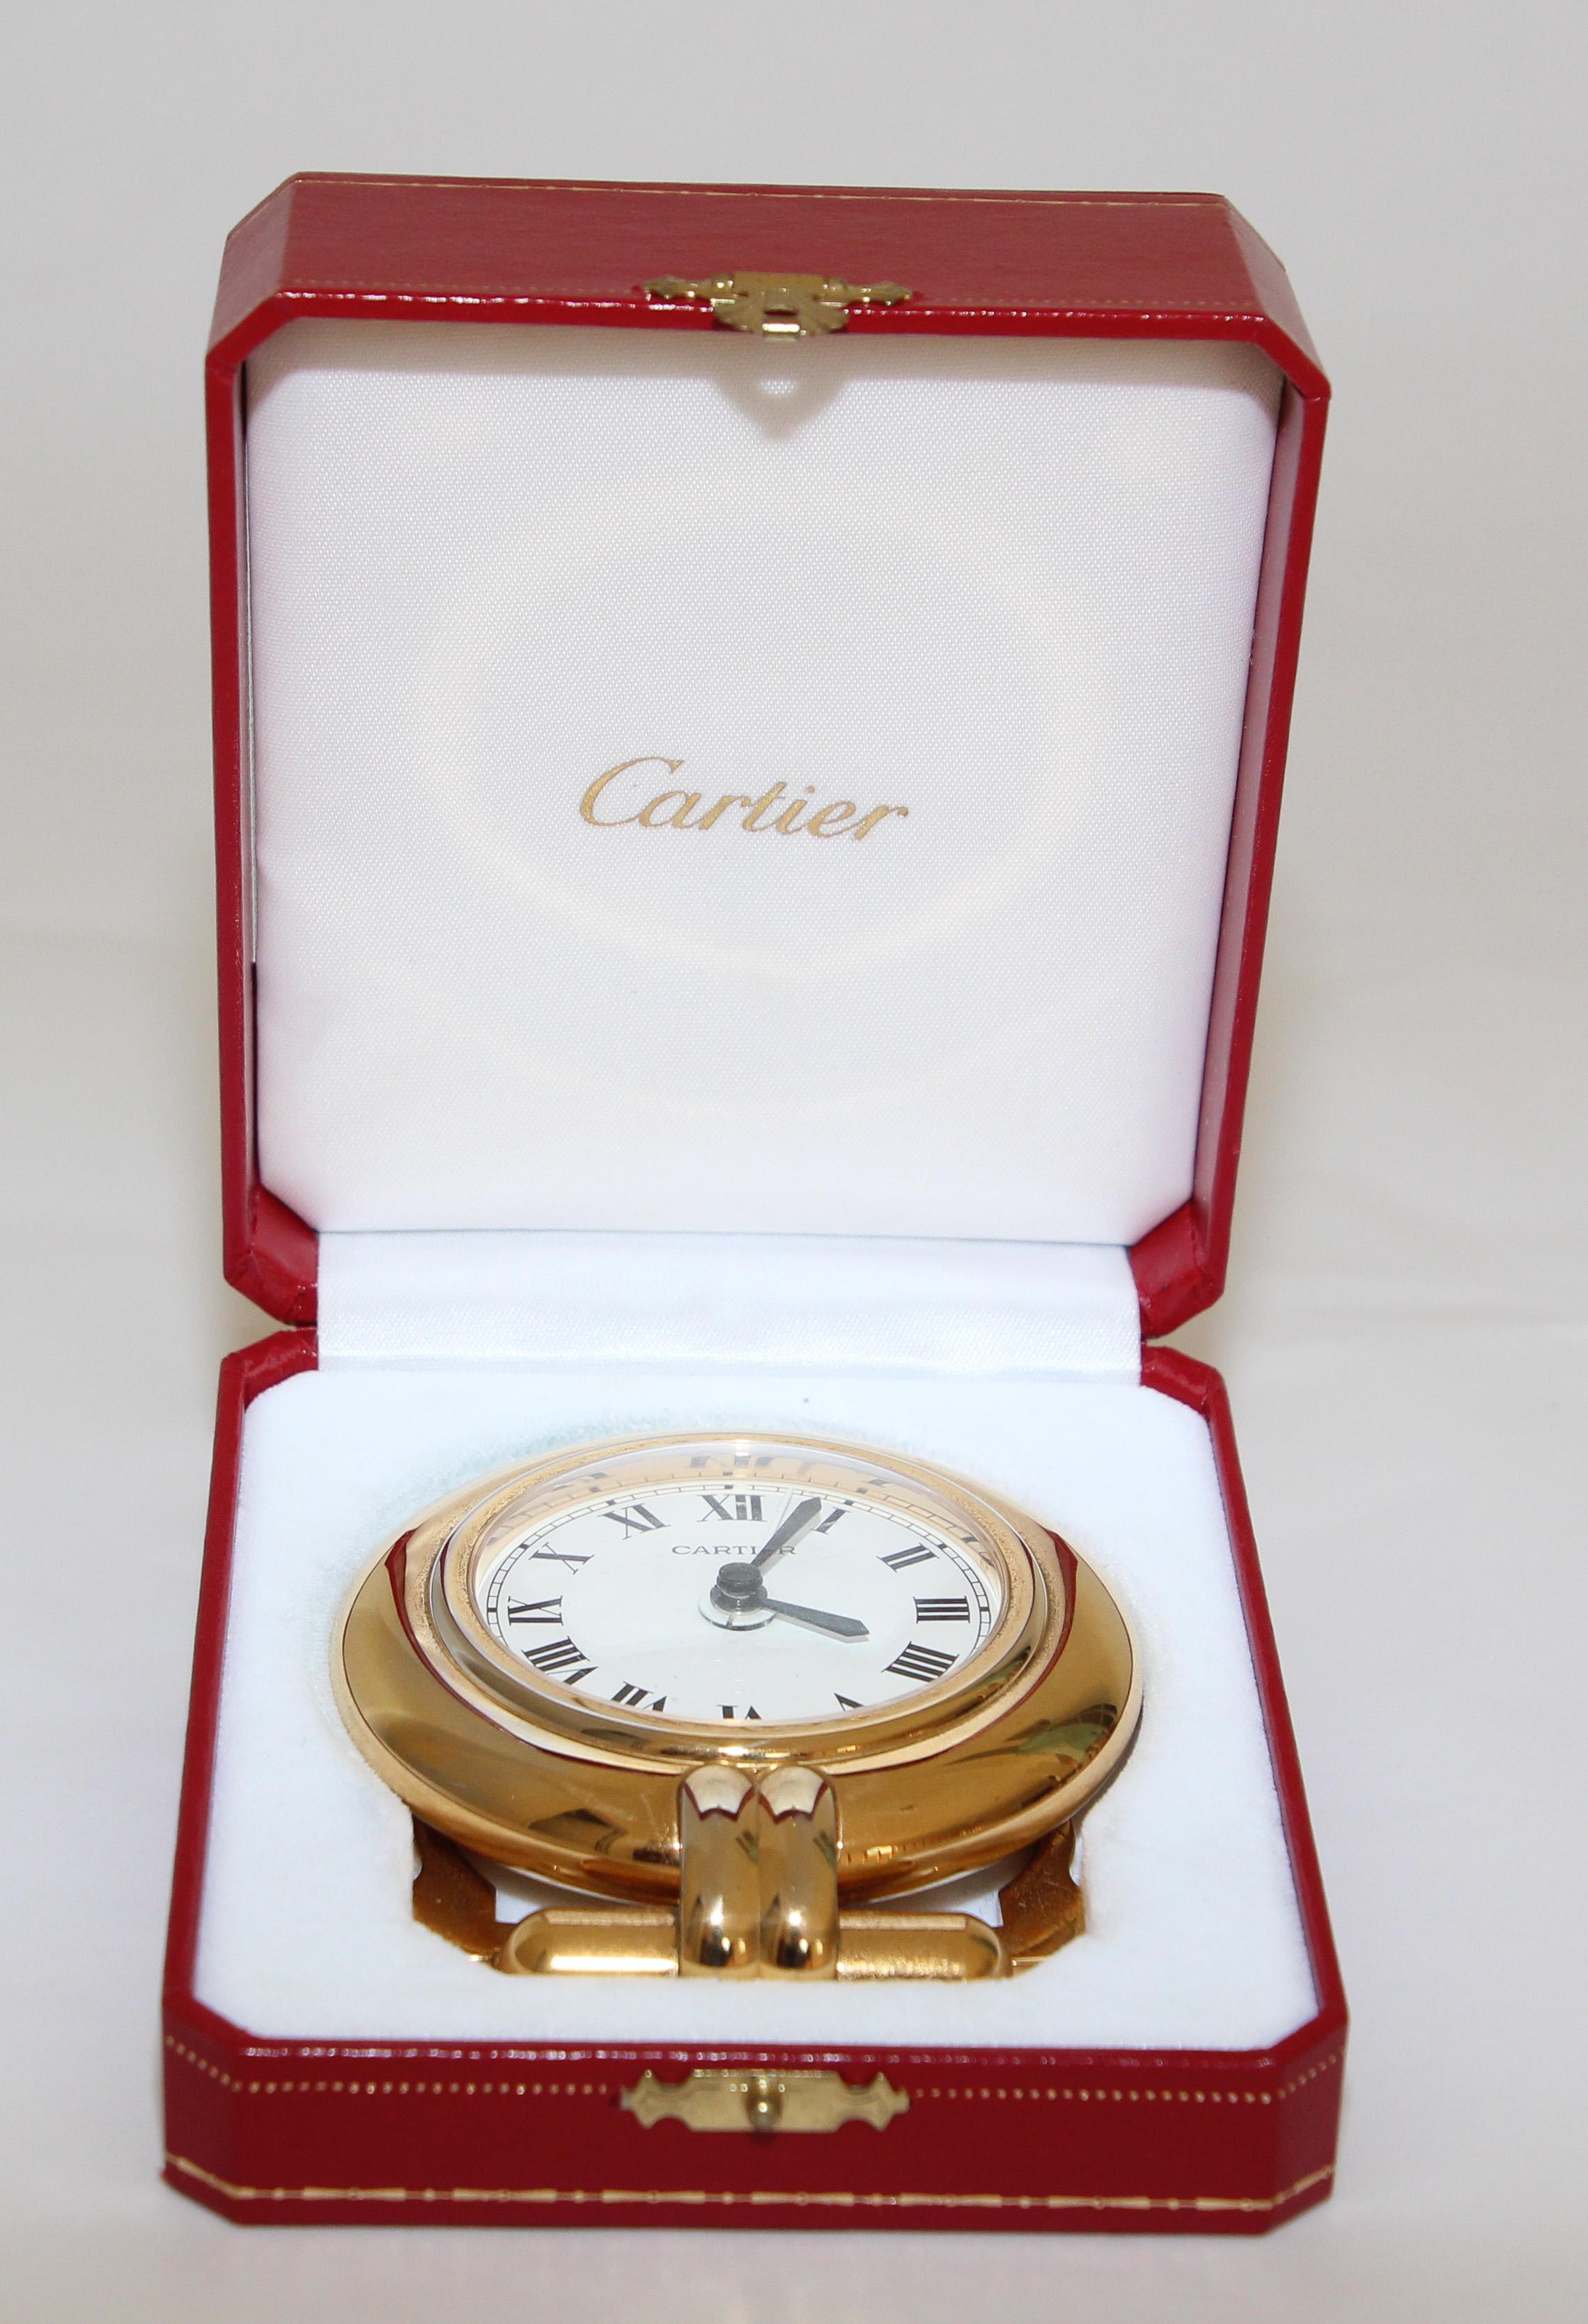 French Cartier Art Deco Travel Quartz 24-Karat Gold-Plated Desk Clock Vintage